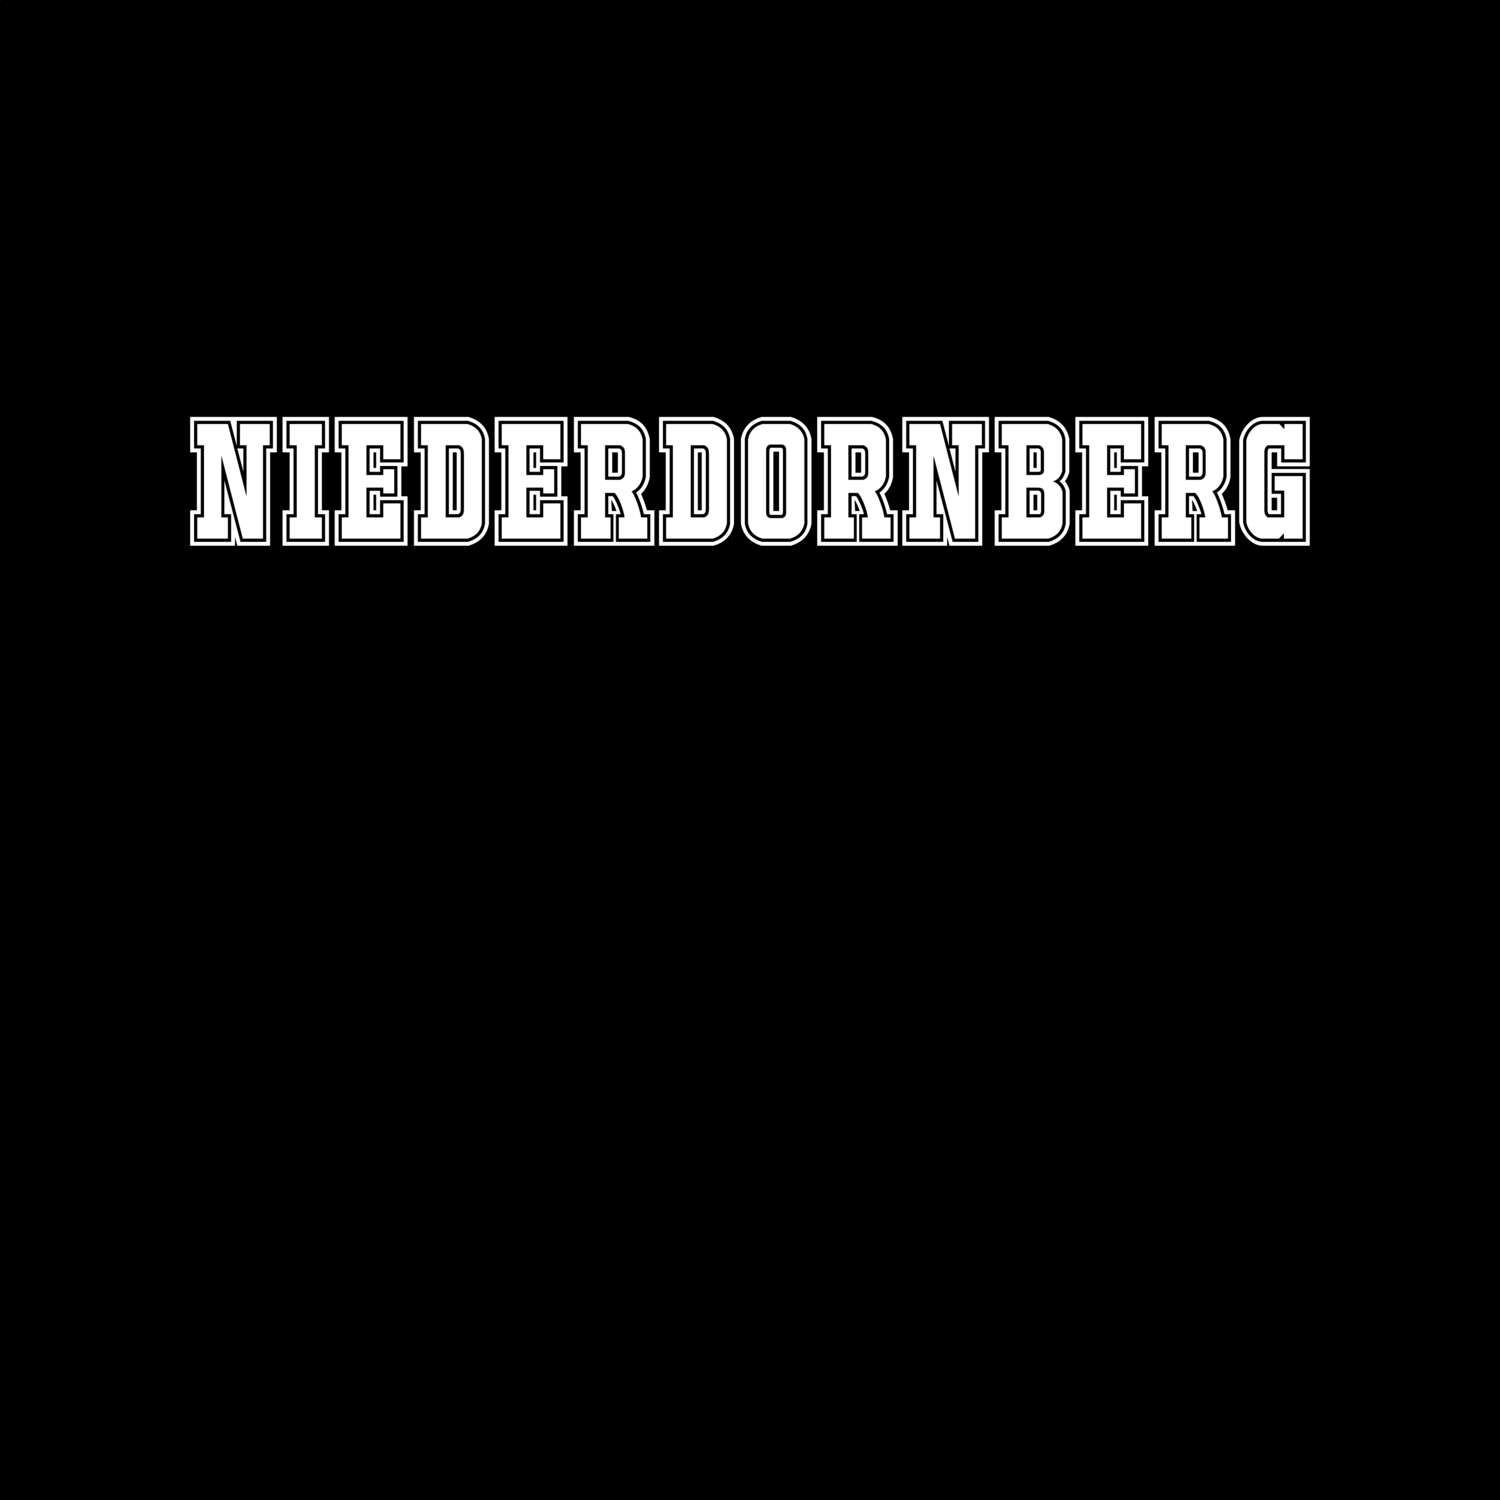 Niederdornberg T-Shirt »Classic«